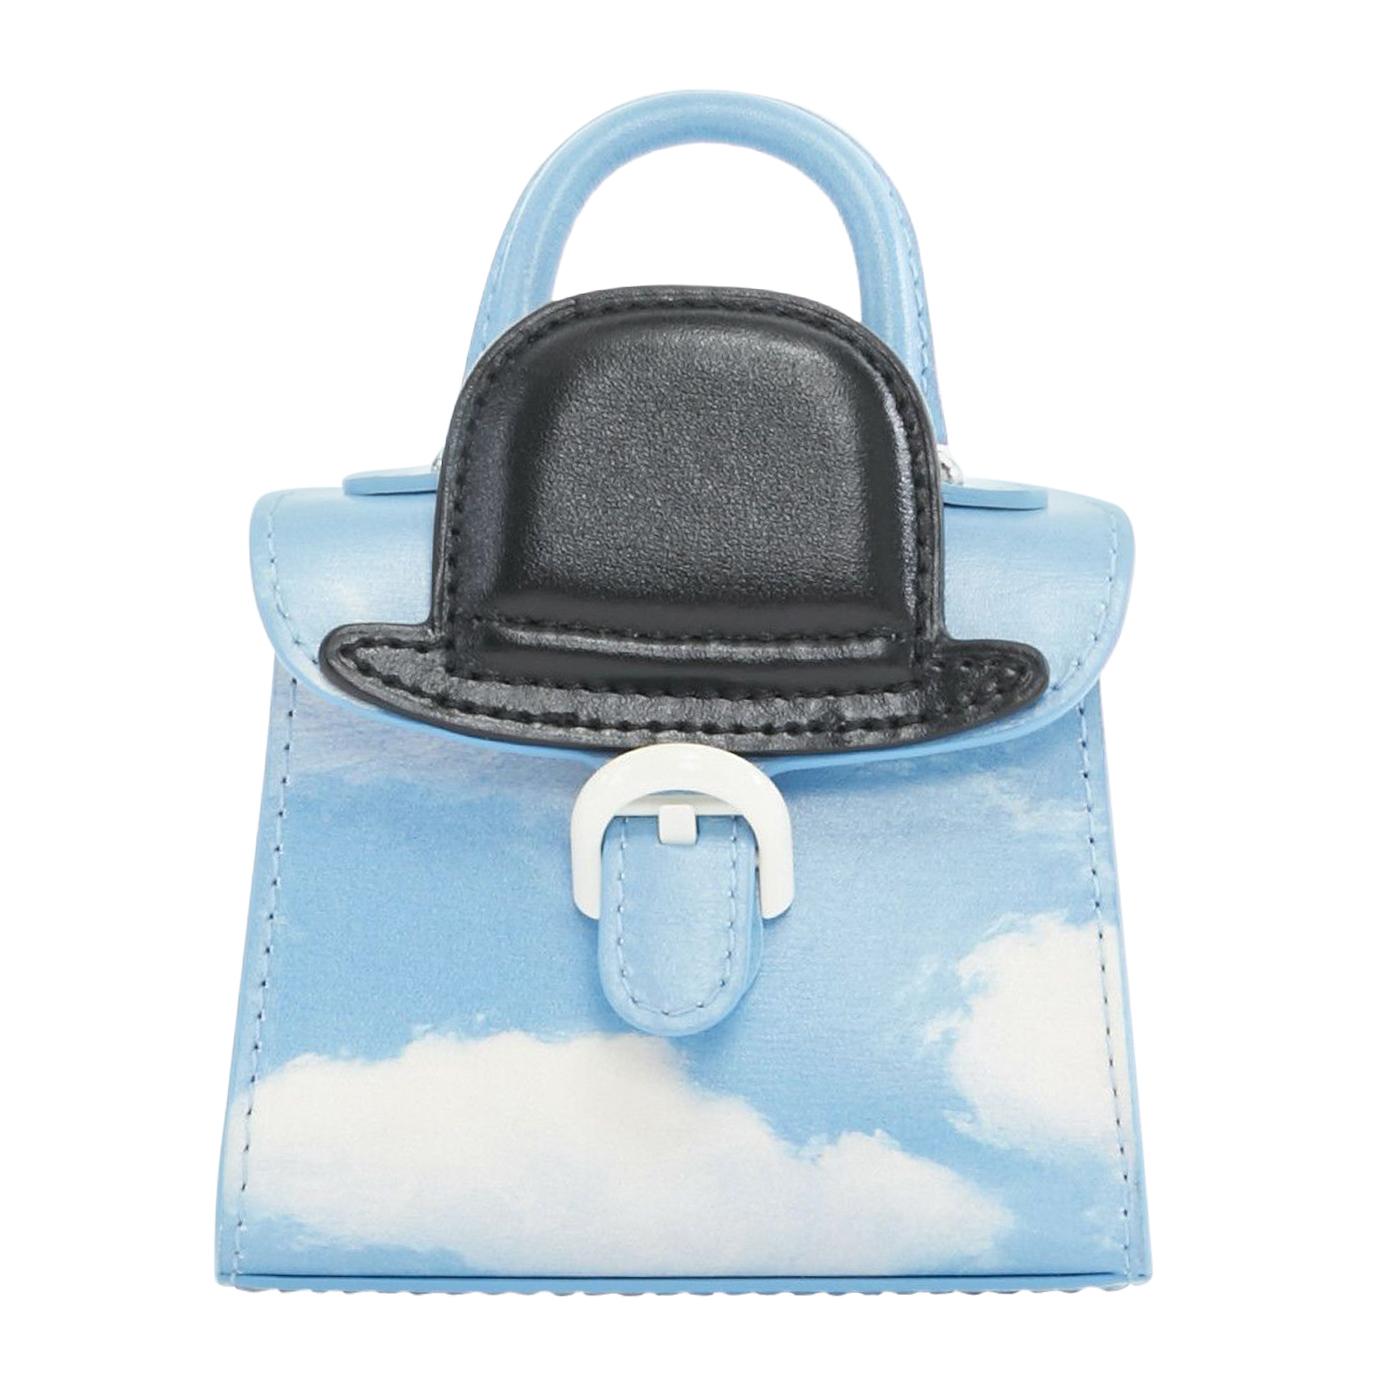 DELVAUX Rene Magritte Miniatures Belgitude bowler hat cloud print mini bag charm